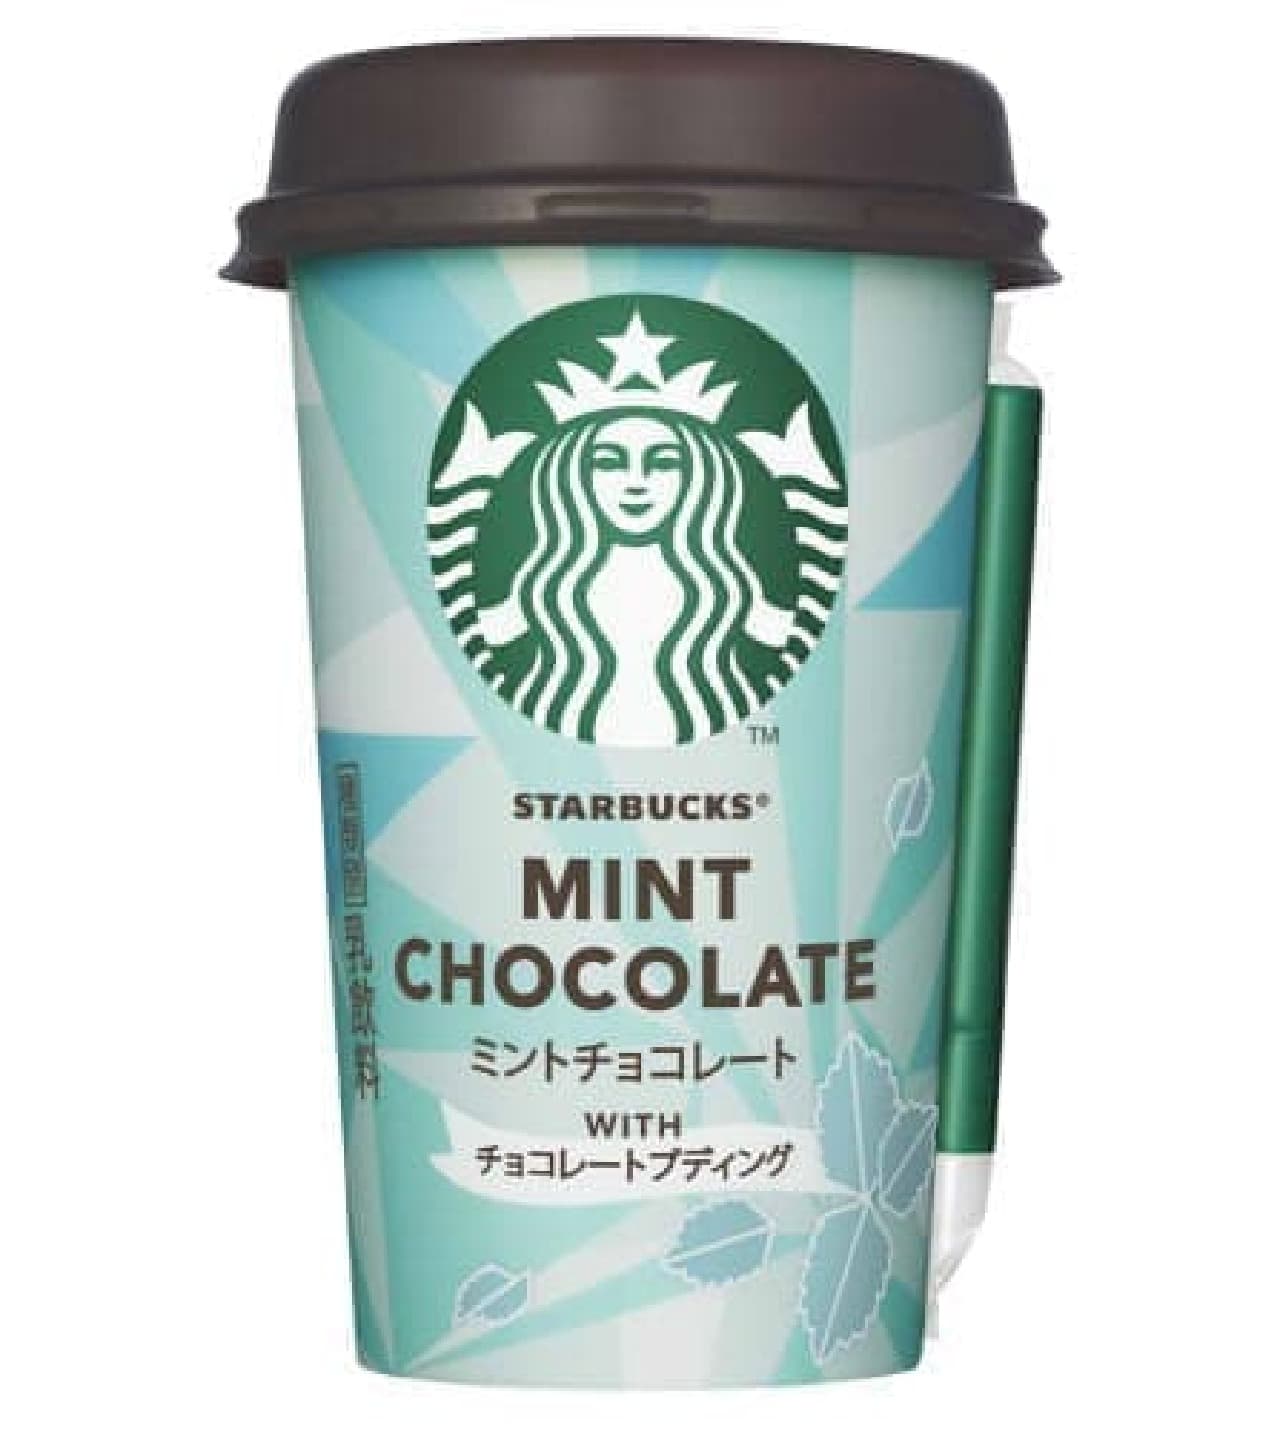 Starbucks Mint Chocolate WITH Chocolate Pudding